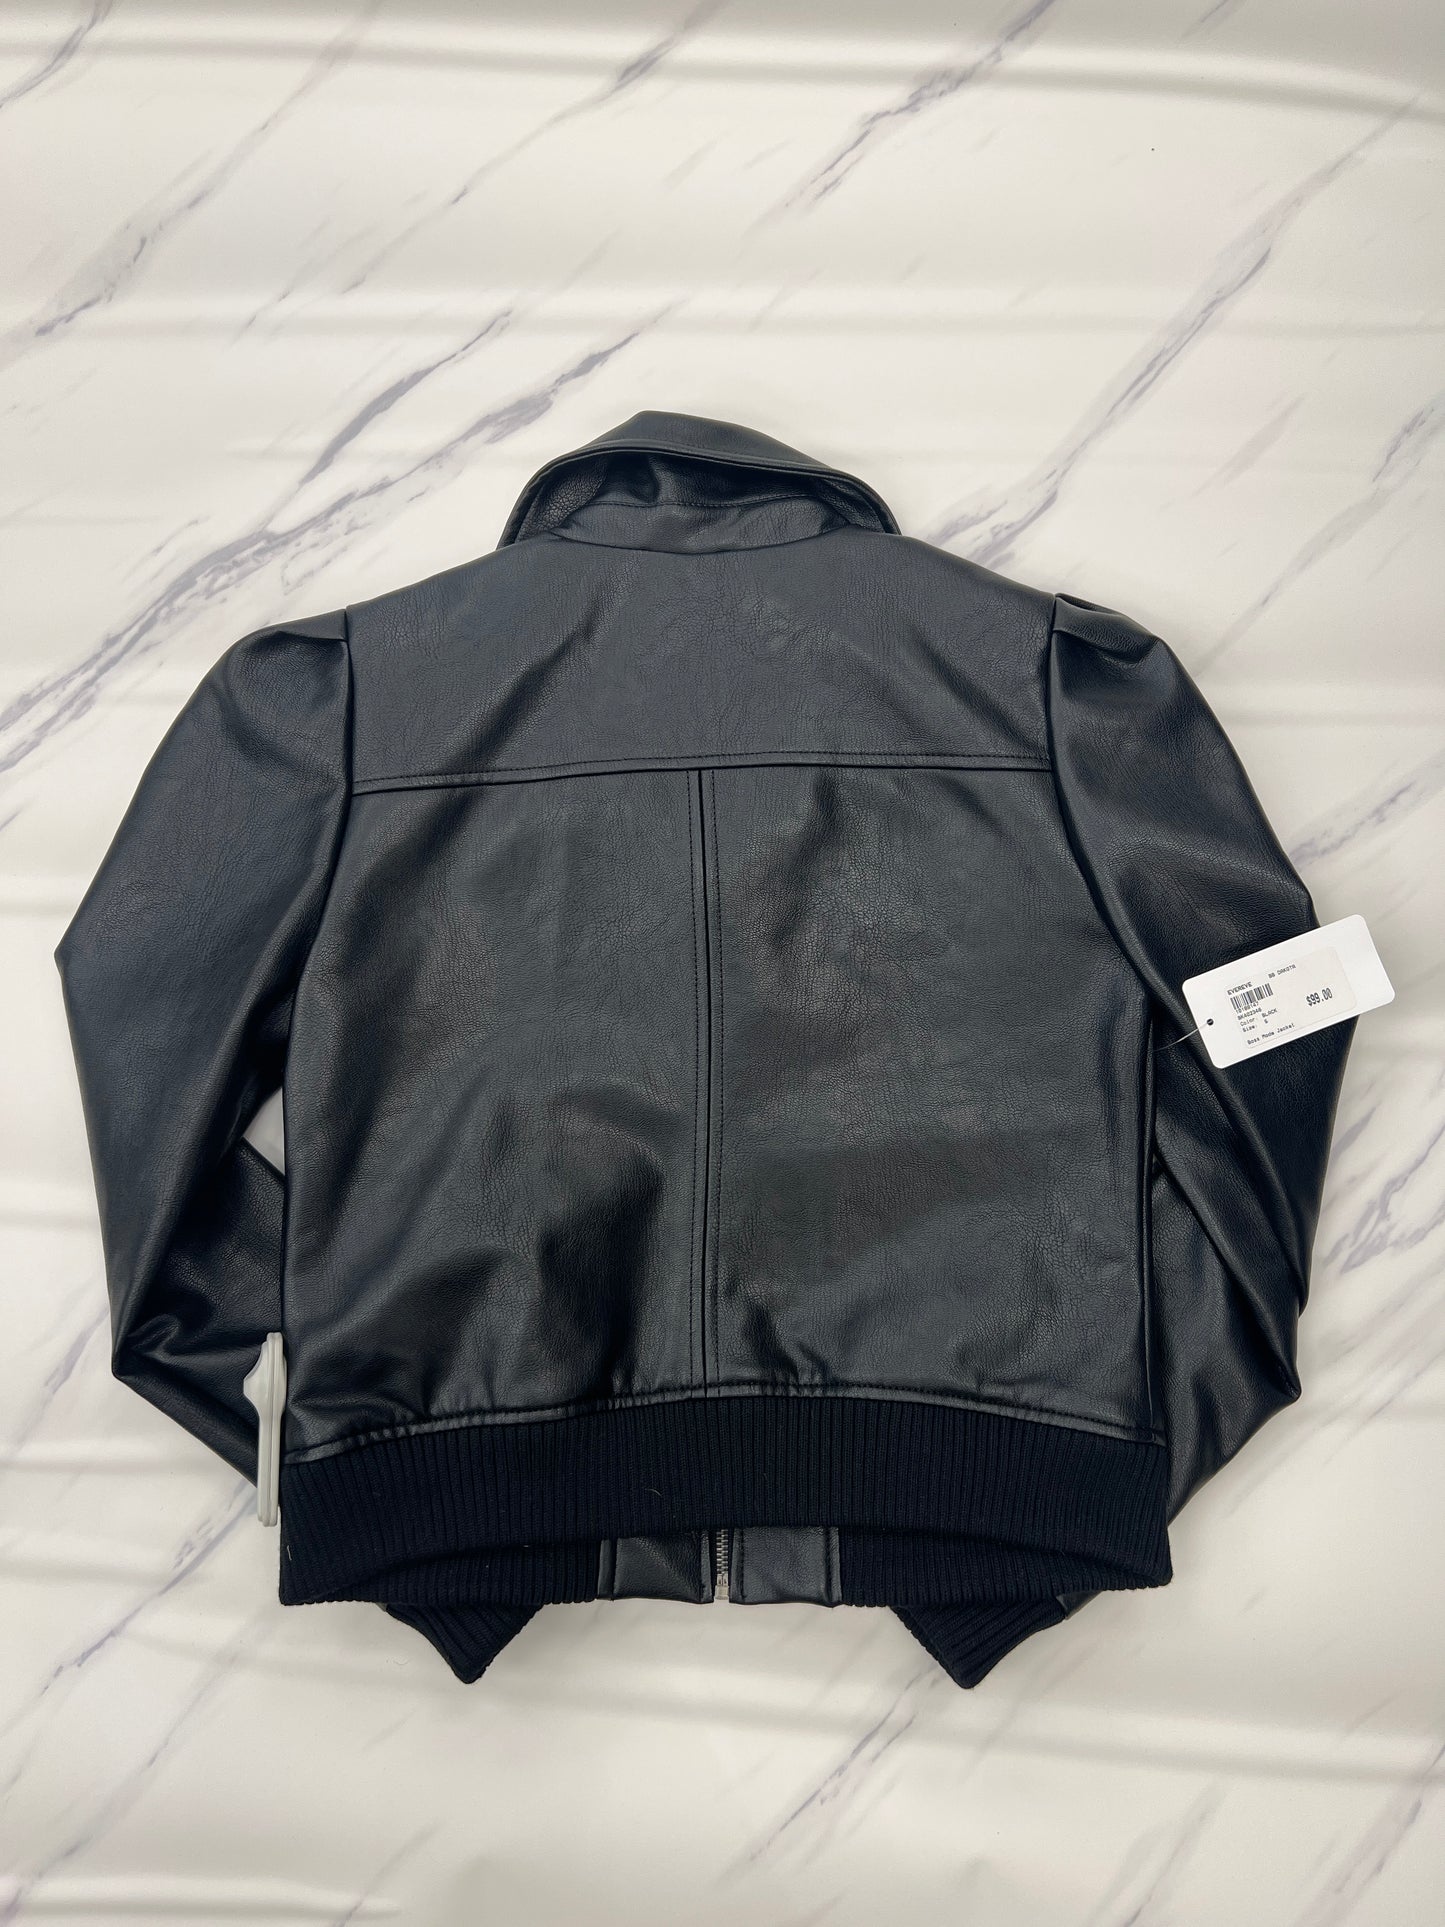 Jacket Moto By Bb Dakota  Size: S